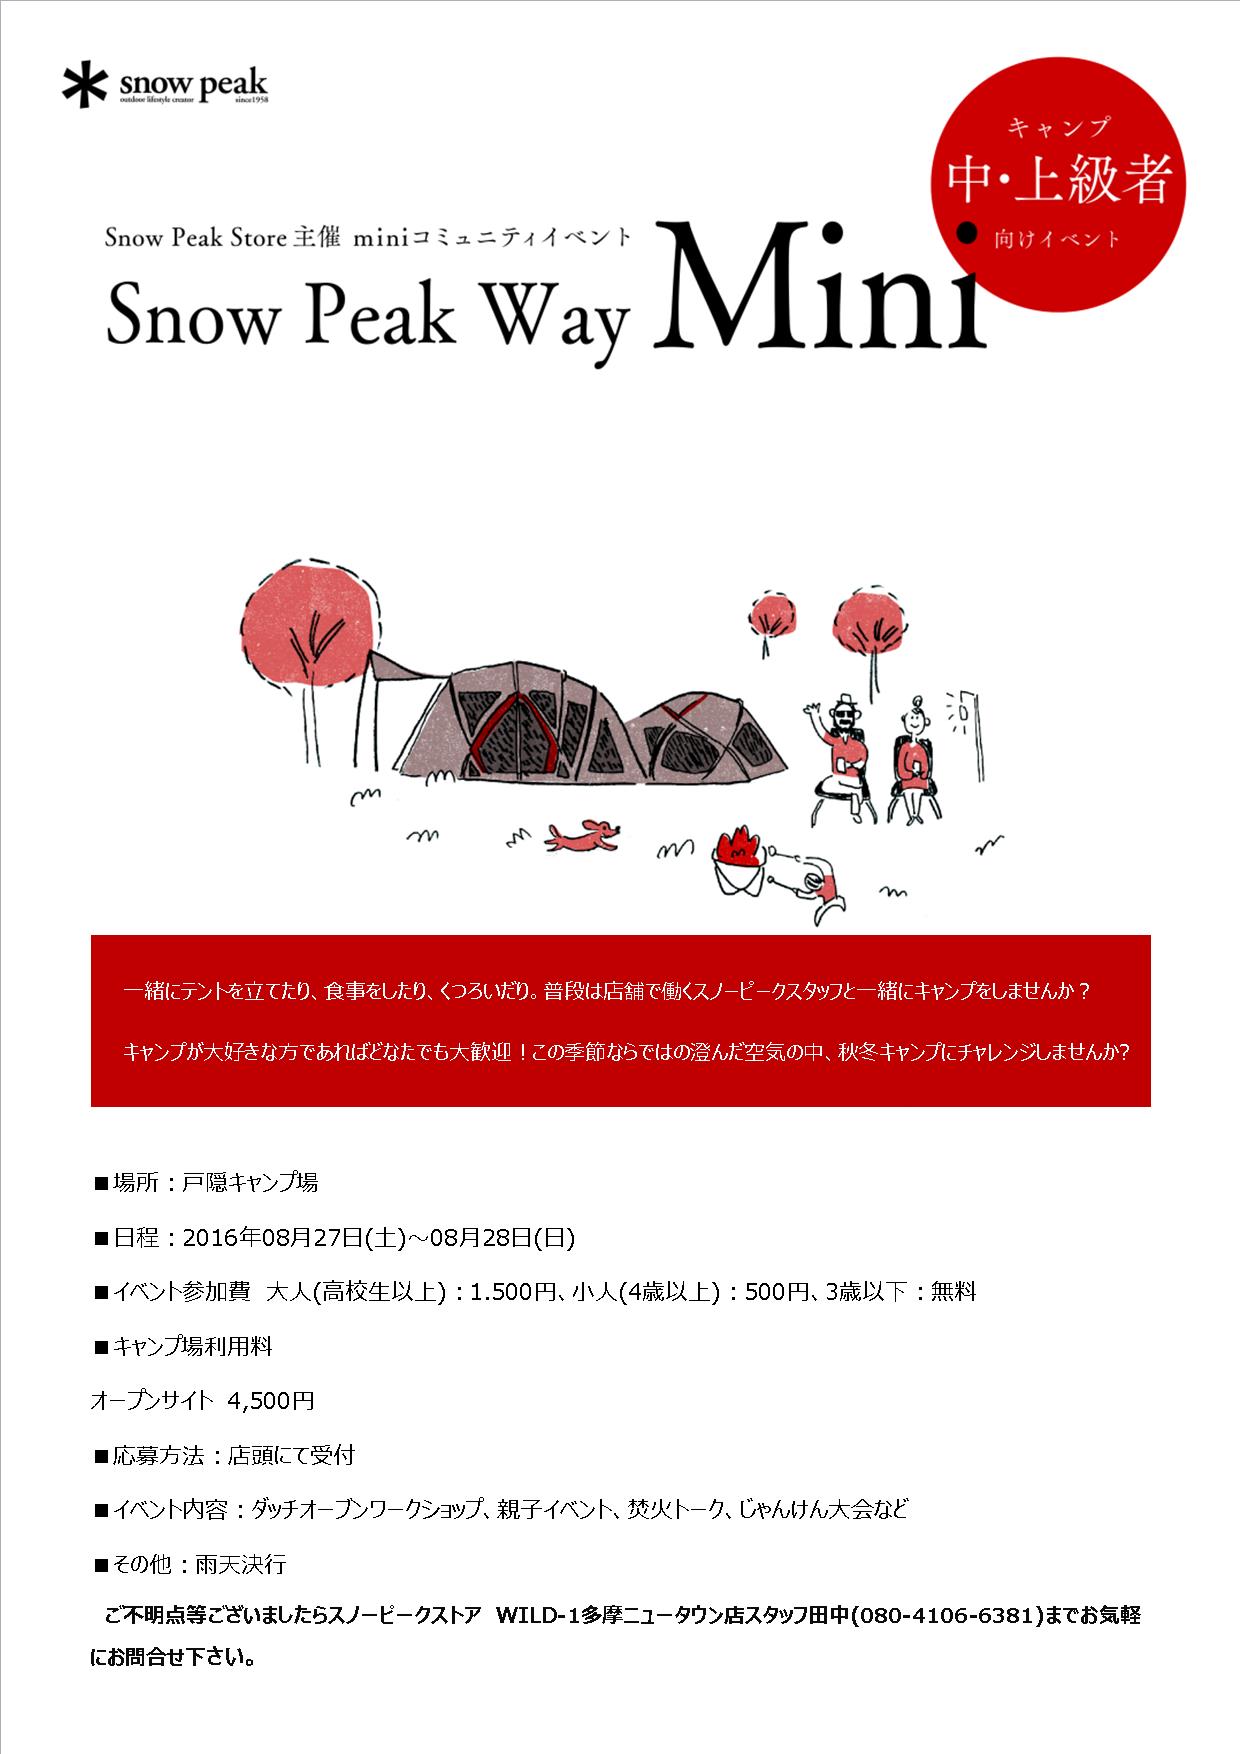 Snow Peak Way mini 多摩ニュータウン店、開催のお知らせ